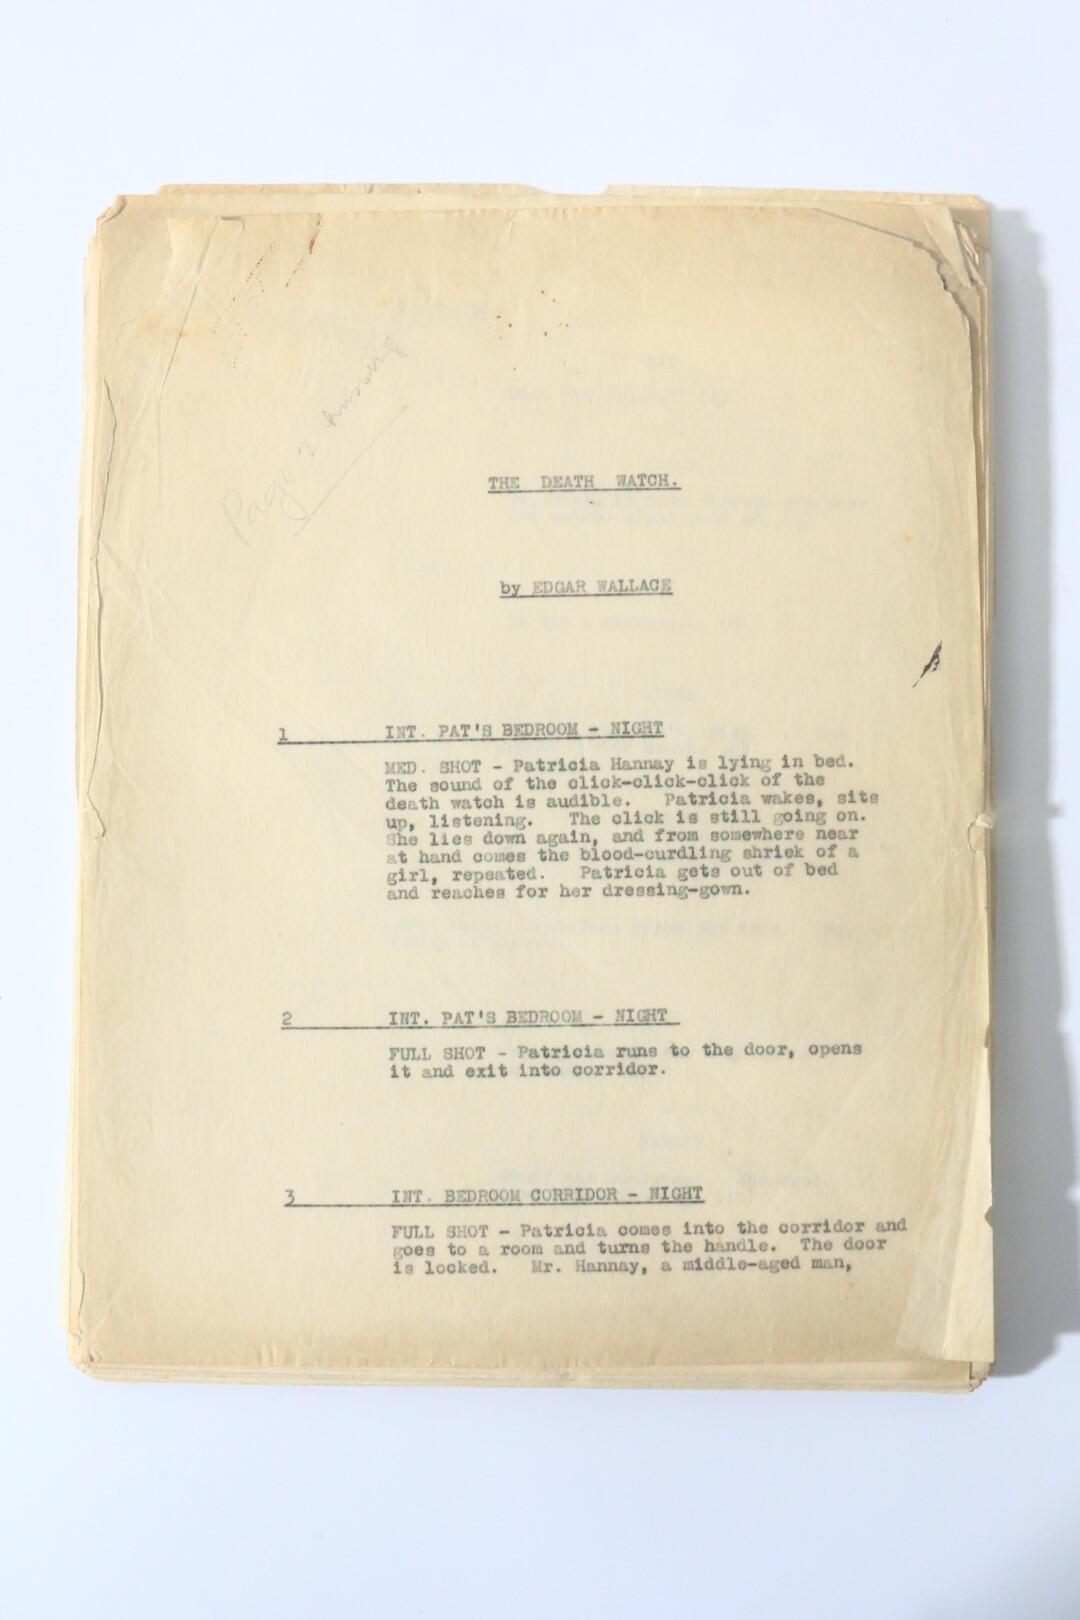 Edgar Wallace - The Death Watch - A Script - No Publisher, No Date [c1930], Manuscript.